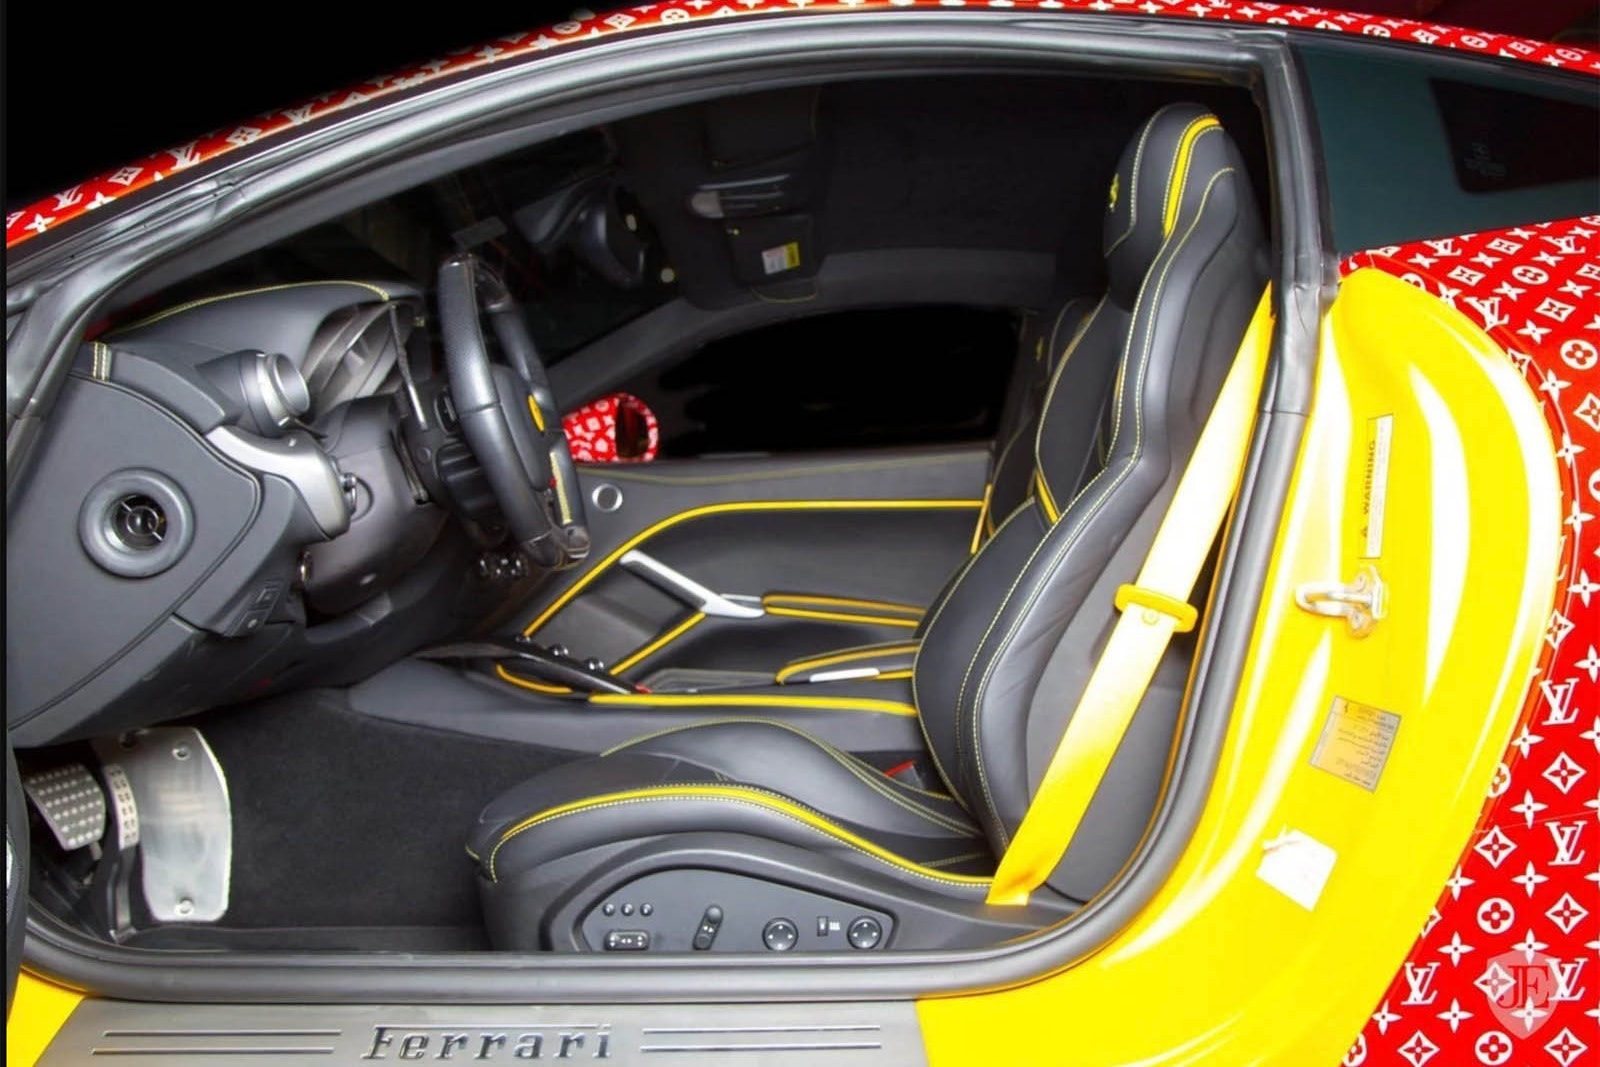 迪拜富童 Money Kicks 出售 Ferrari F12 Berlinetta「Supreme x Louis Vuitton」定製跑車